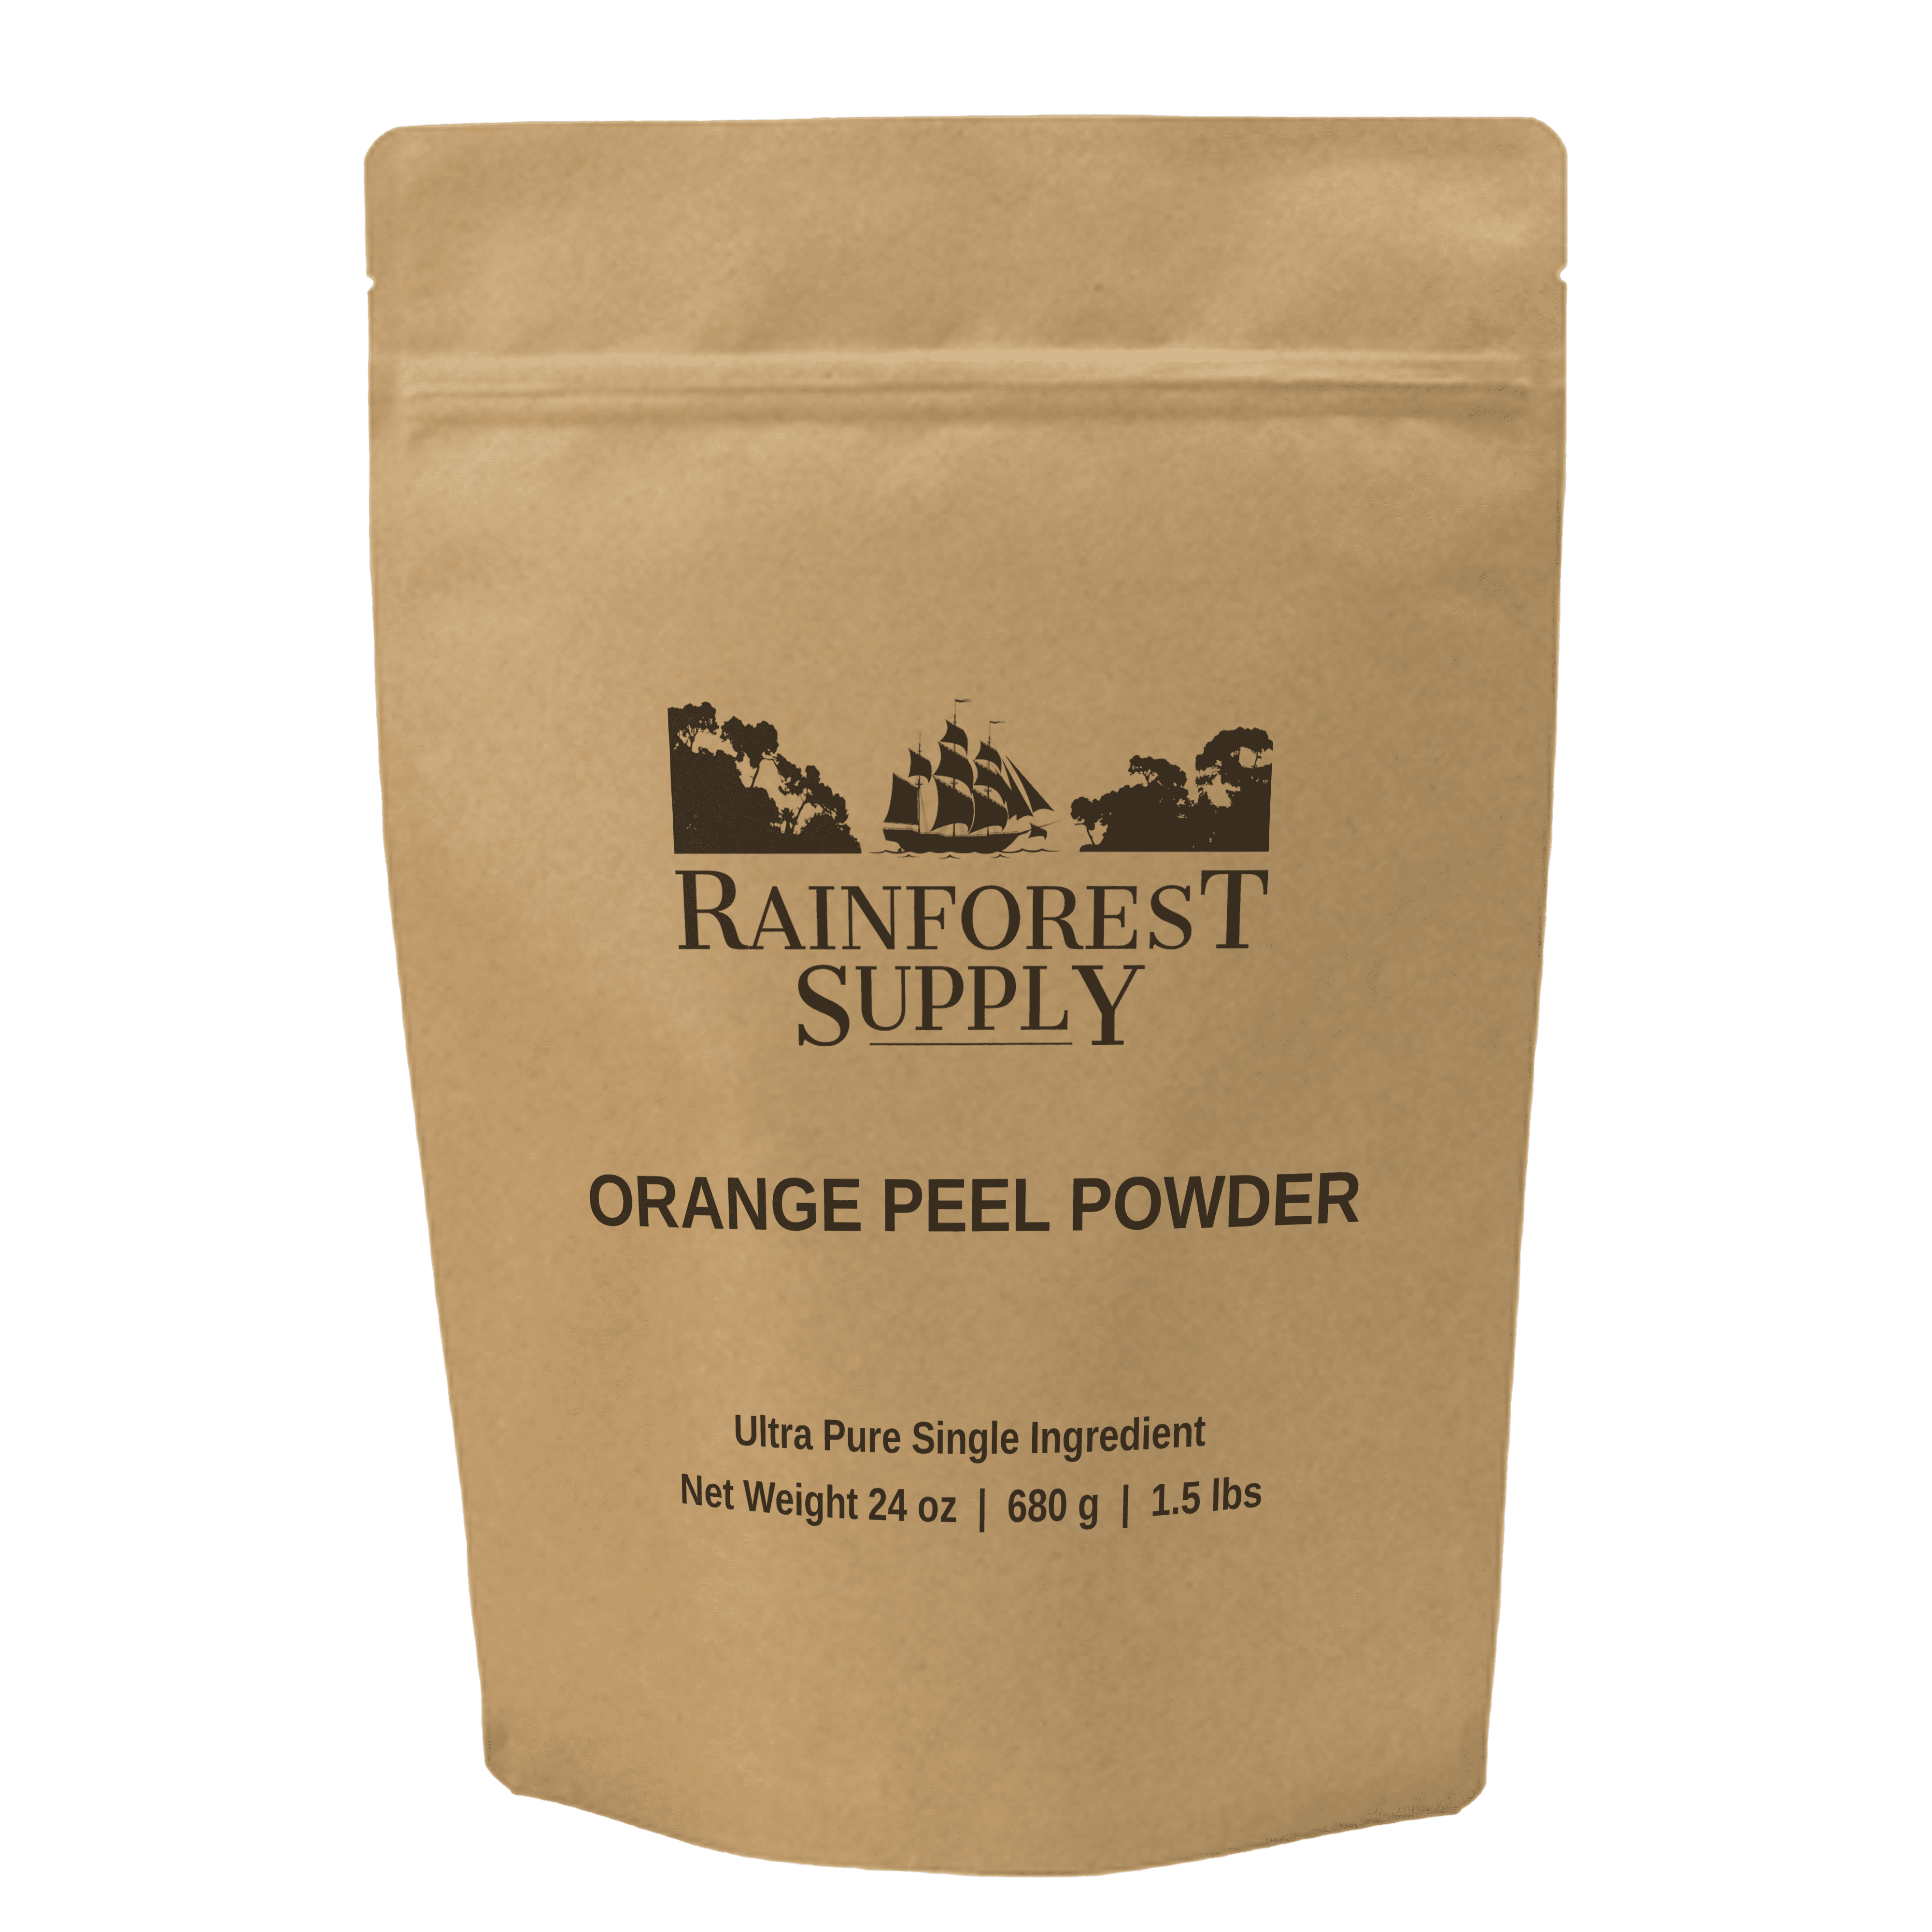 Orange Peel Powder Rainforest Supply